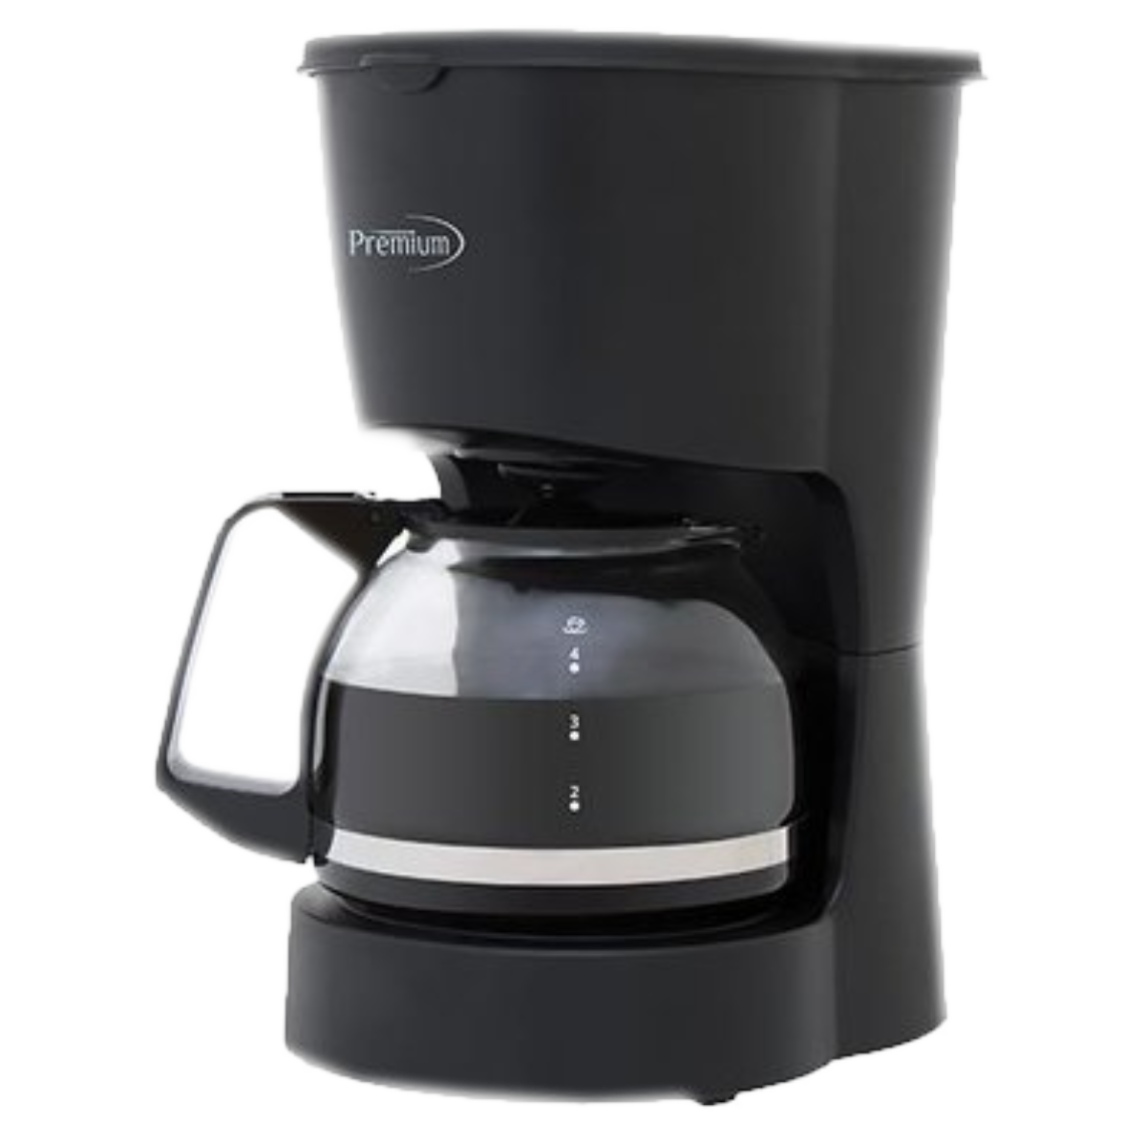 Premium - 4 Cup Capacity Coffee Maker